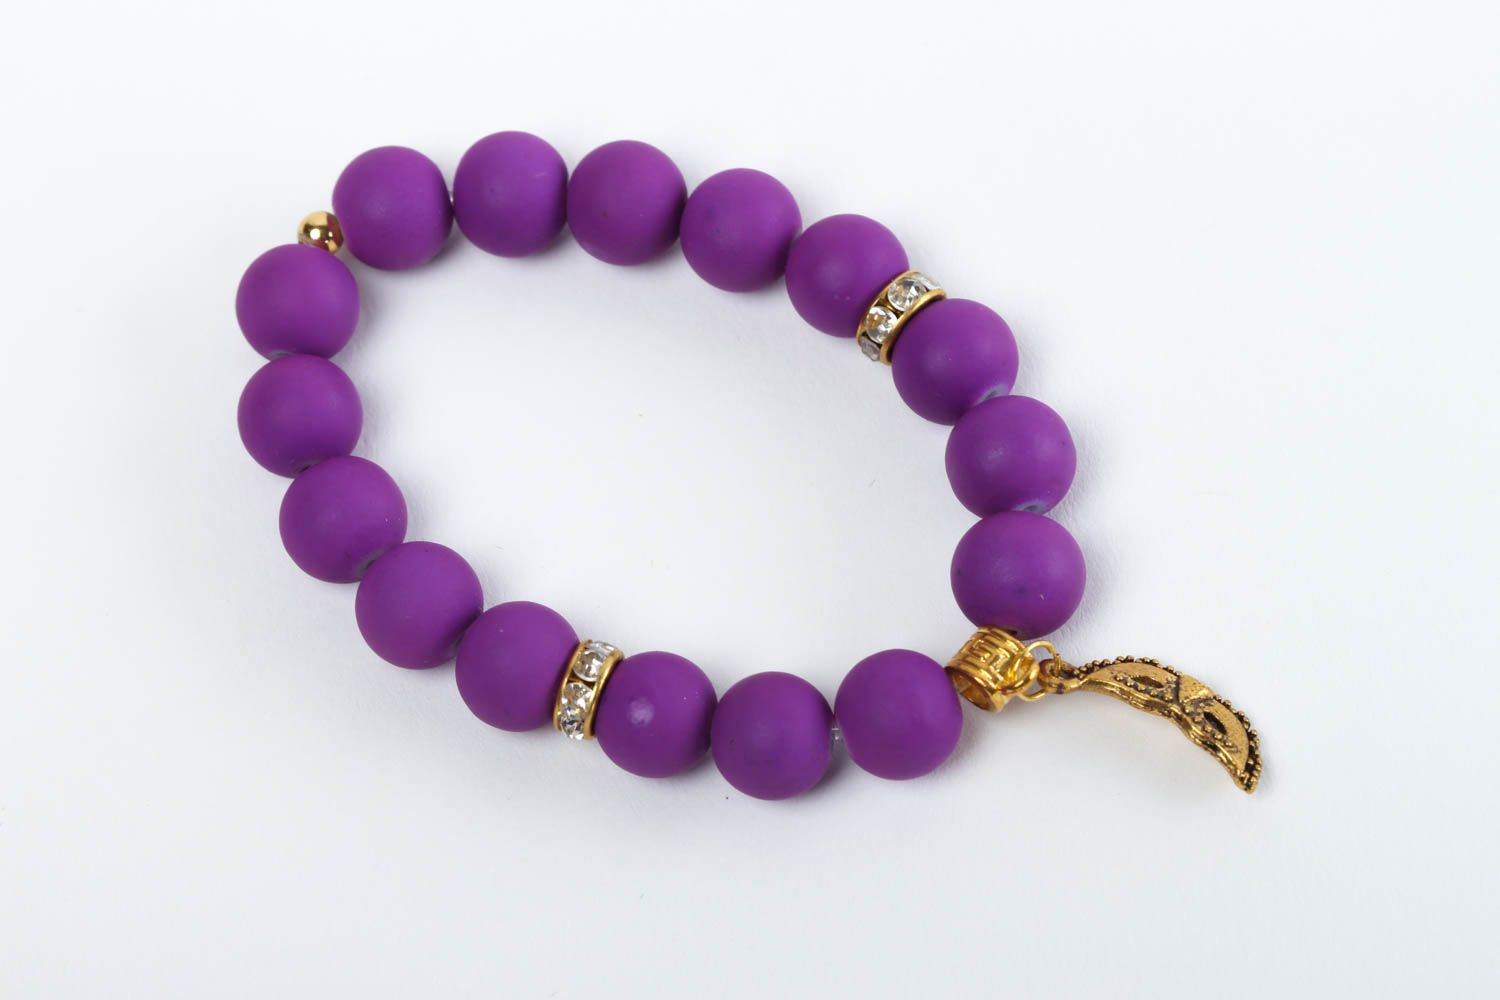 Handmade bracelet designer accessory unusual gift for her designer jewelry photo 1